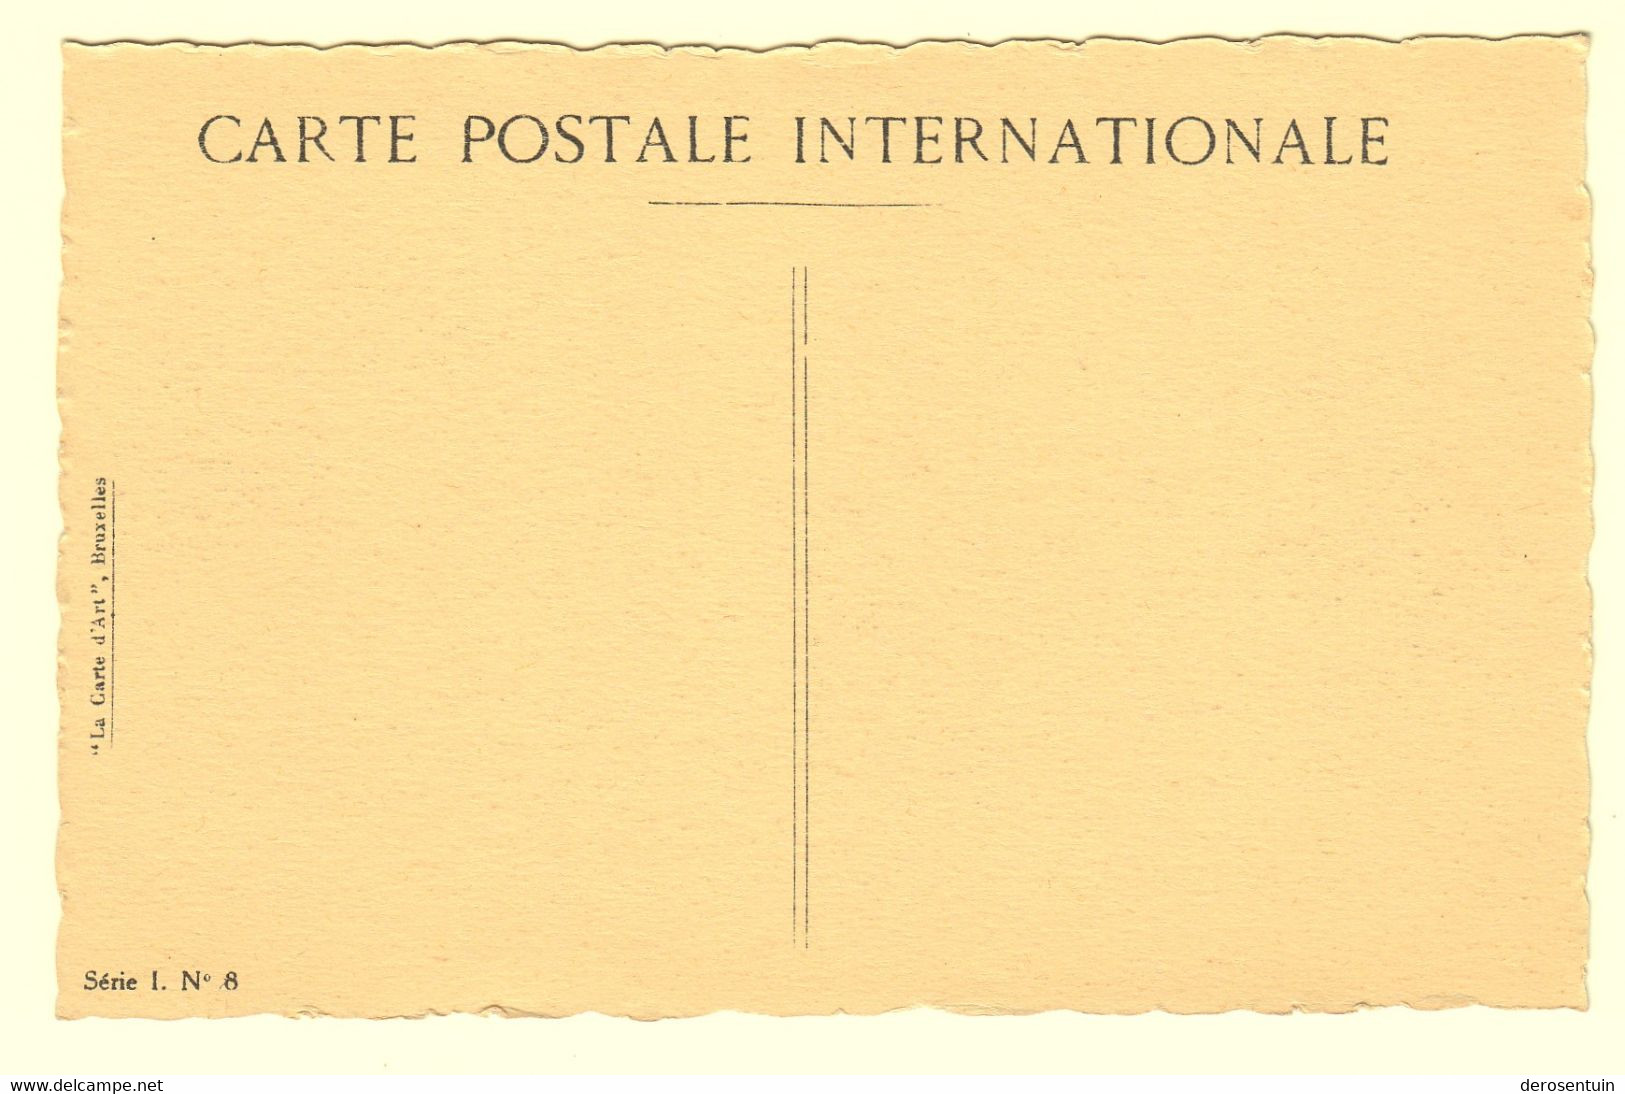 a0138	[Postkaarten] Brussel / Bruxelles (avenue Louise, Gare du Nord, panorama, allée Verte, etc) lot van 49 postkaarten